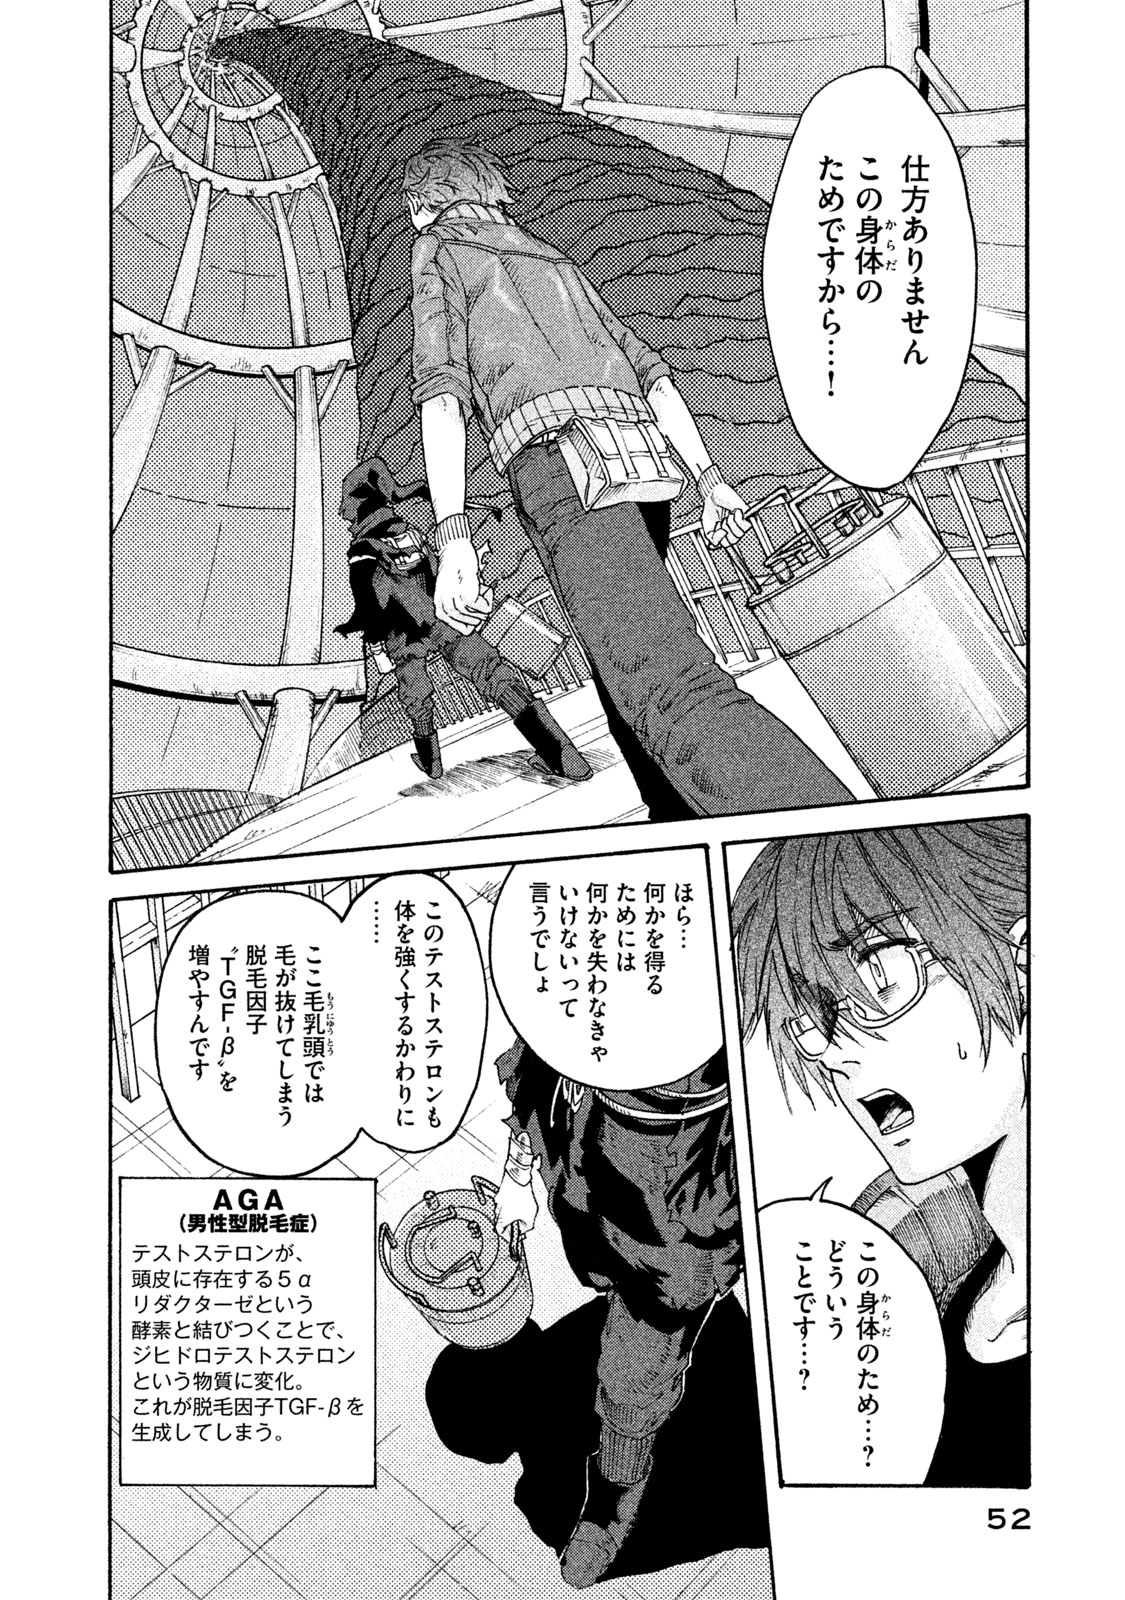 Hataraku Saibou BLACK - Chapter 20 - Page 8